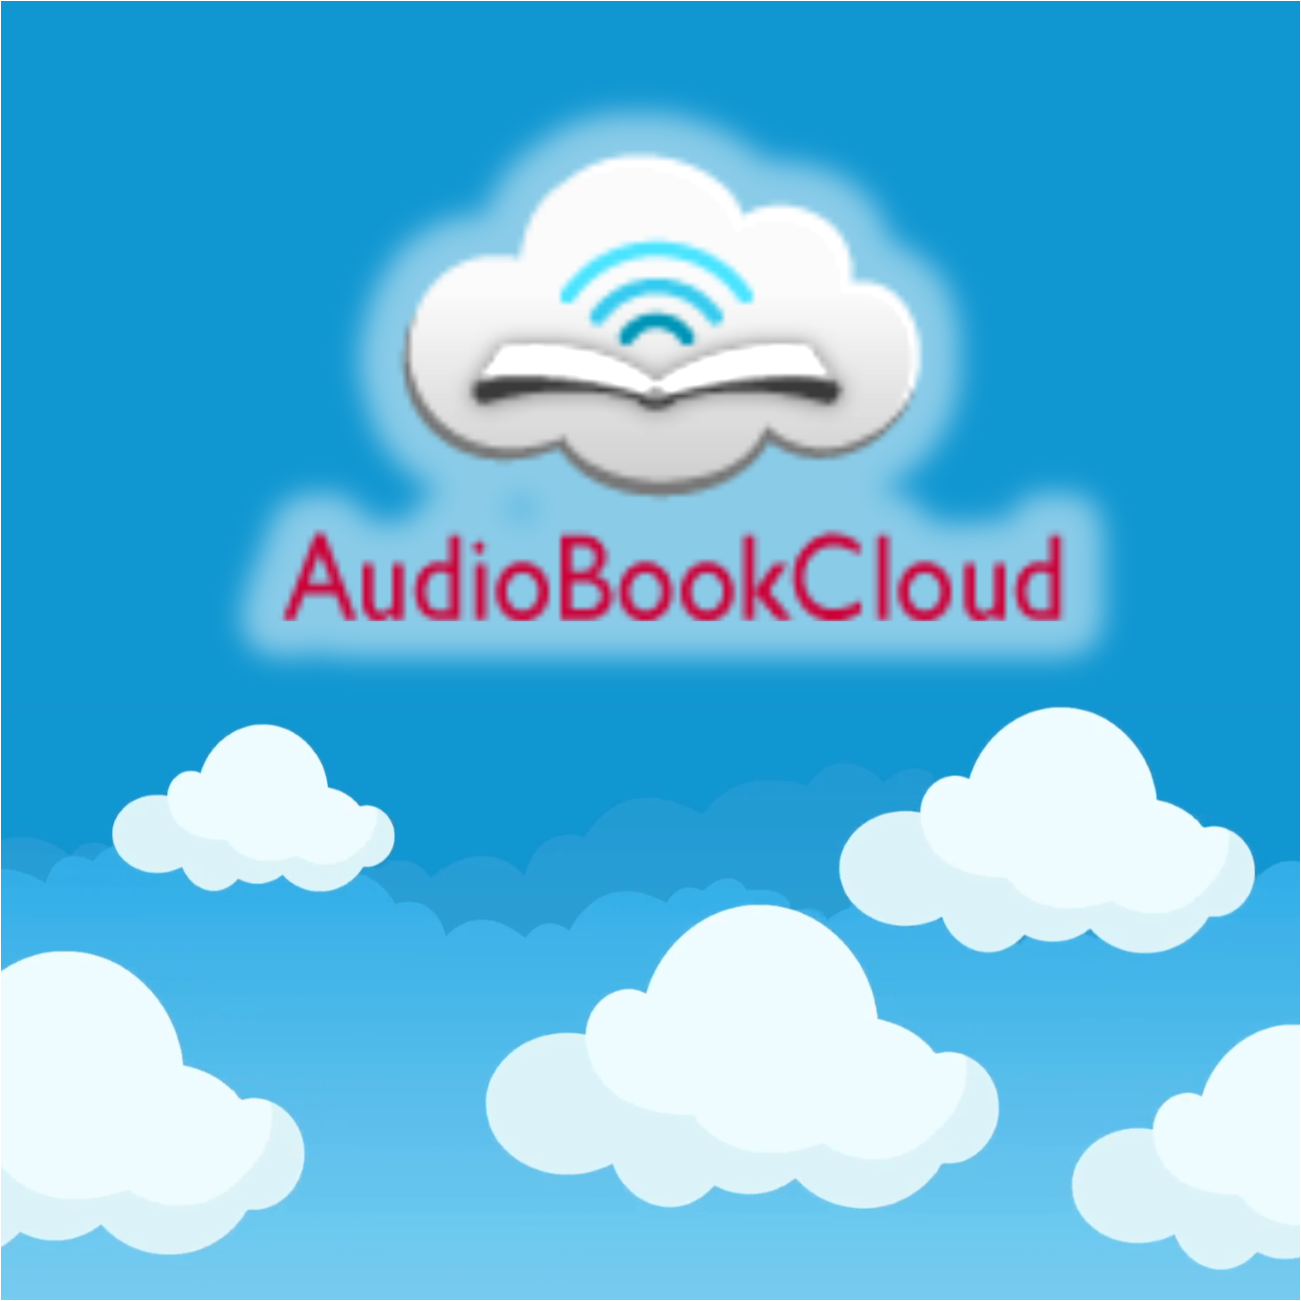 AudioBook Cloud thumbnail image. 